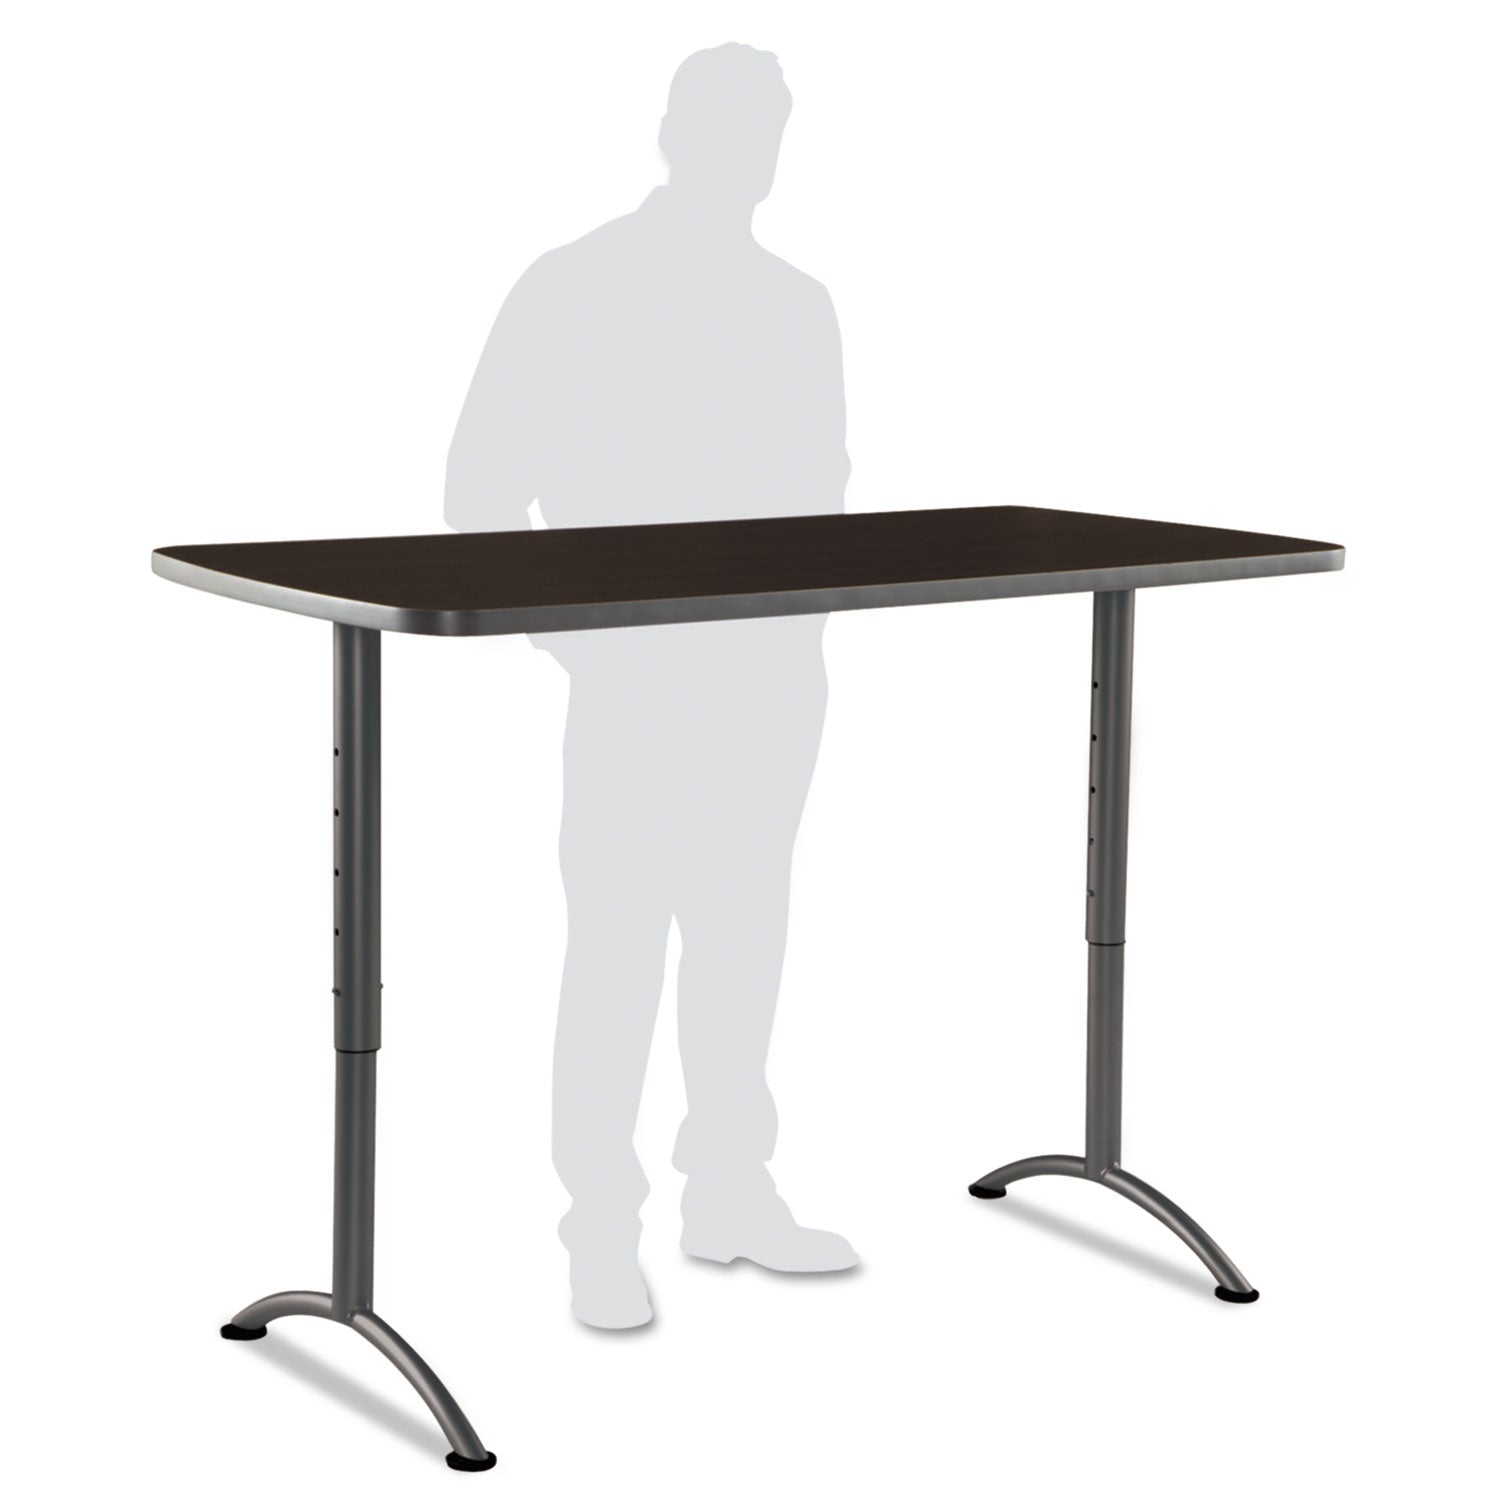 ARC Adjustable-Height Table, Rectangular, 30" x 60" x 30" to 42", Walnut/Gray - 